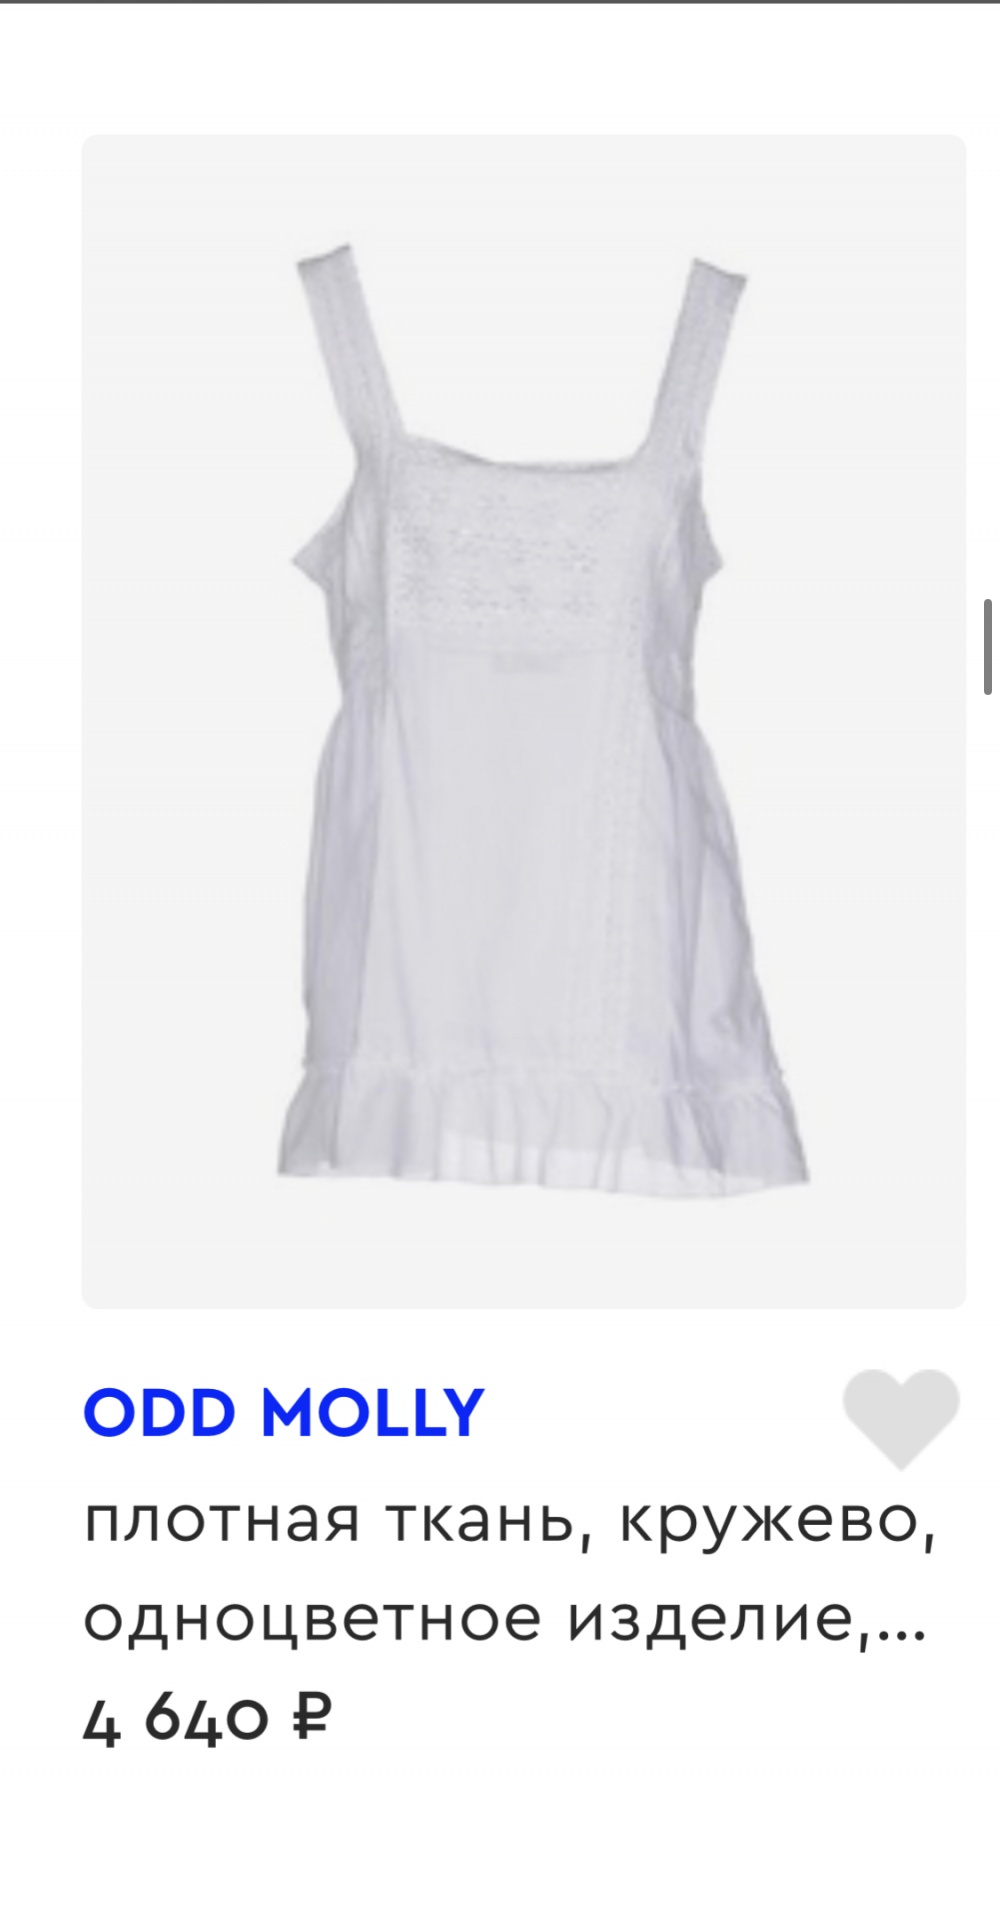 Рубашка odd molly, 46-48 р.